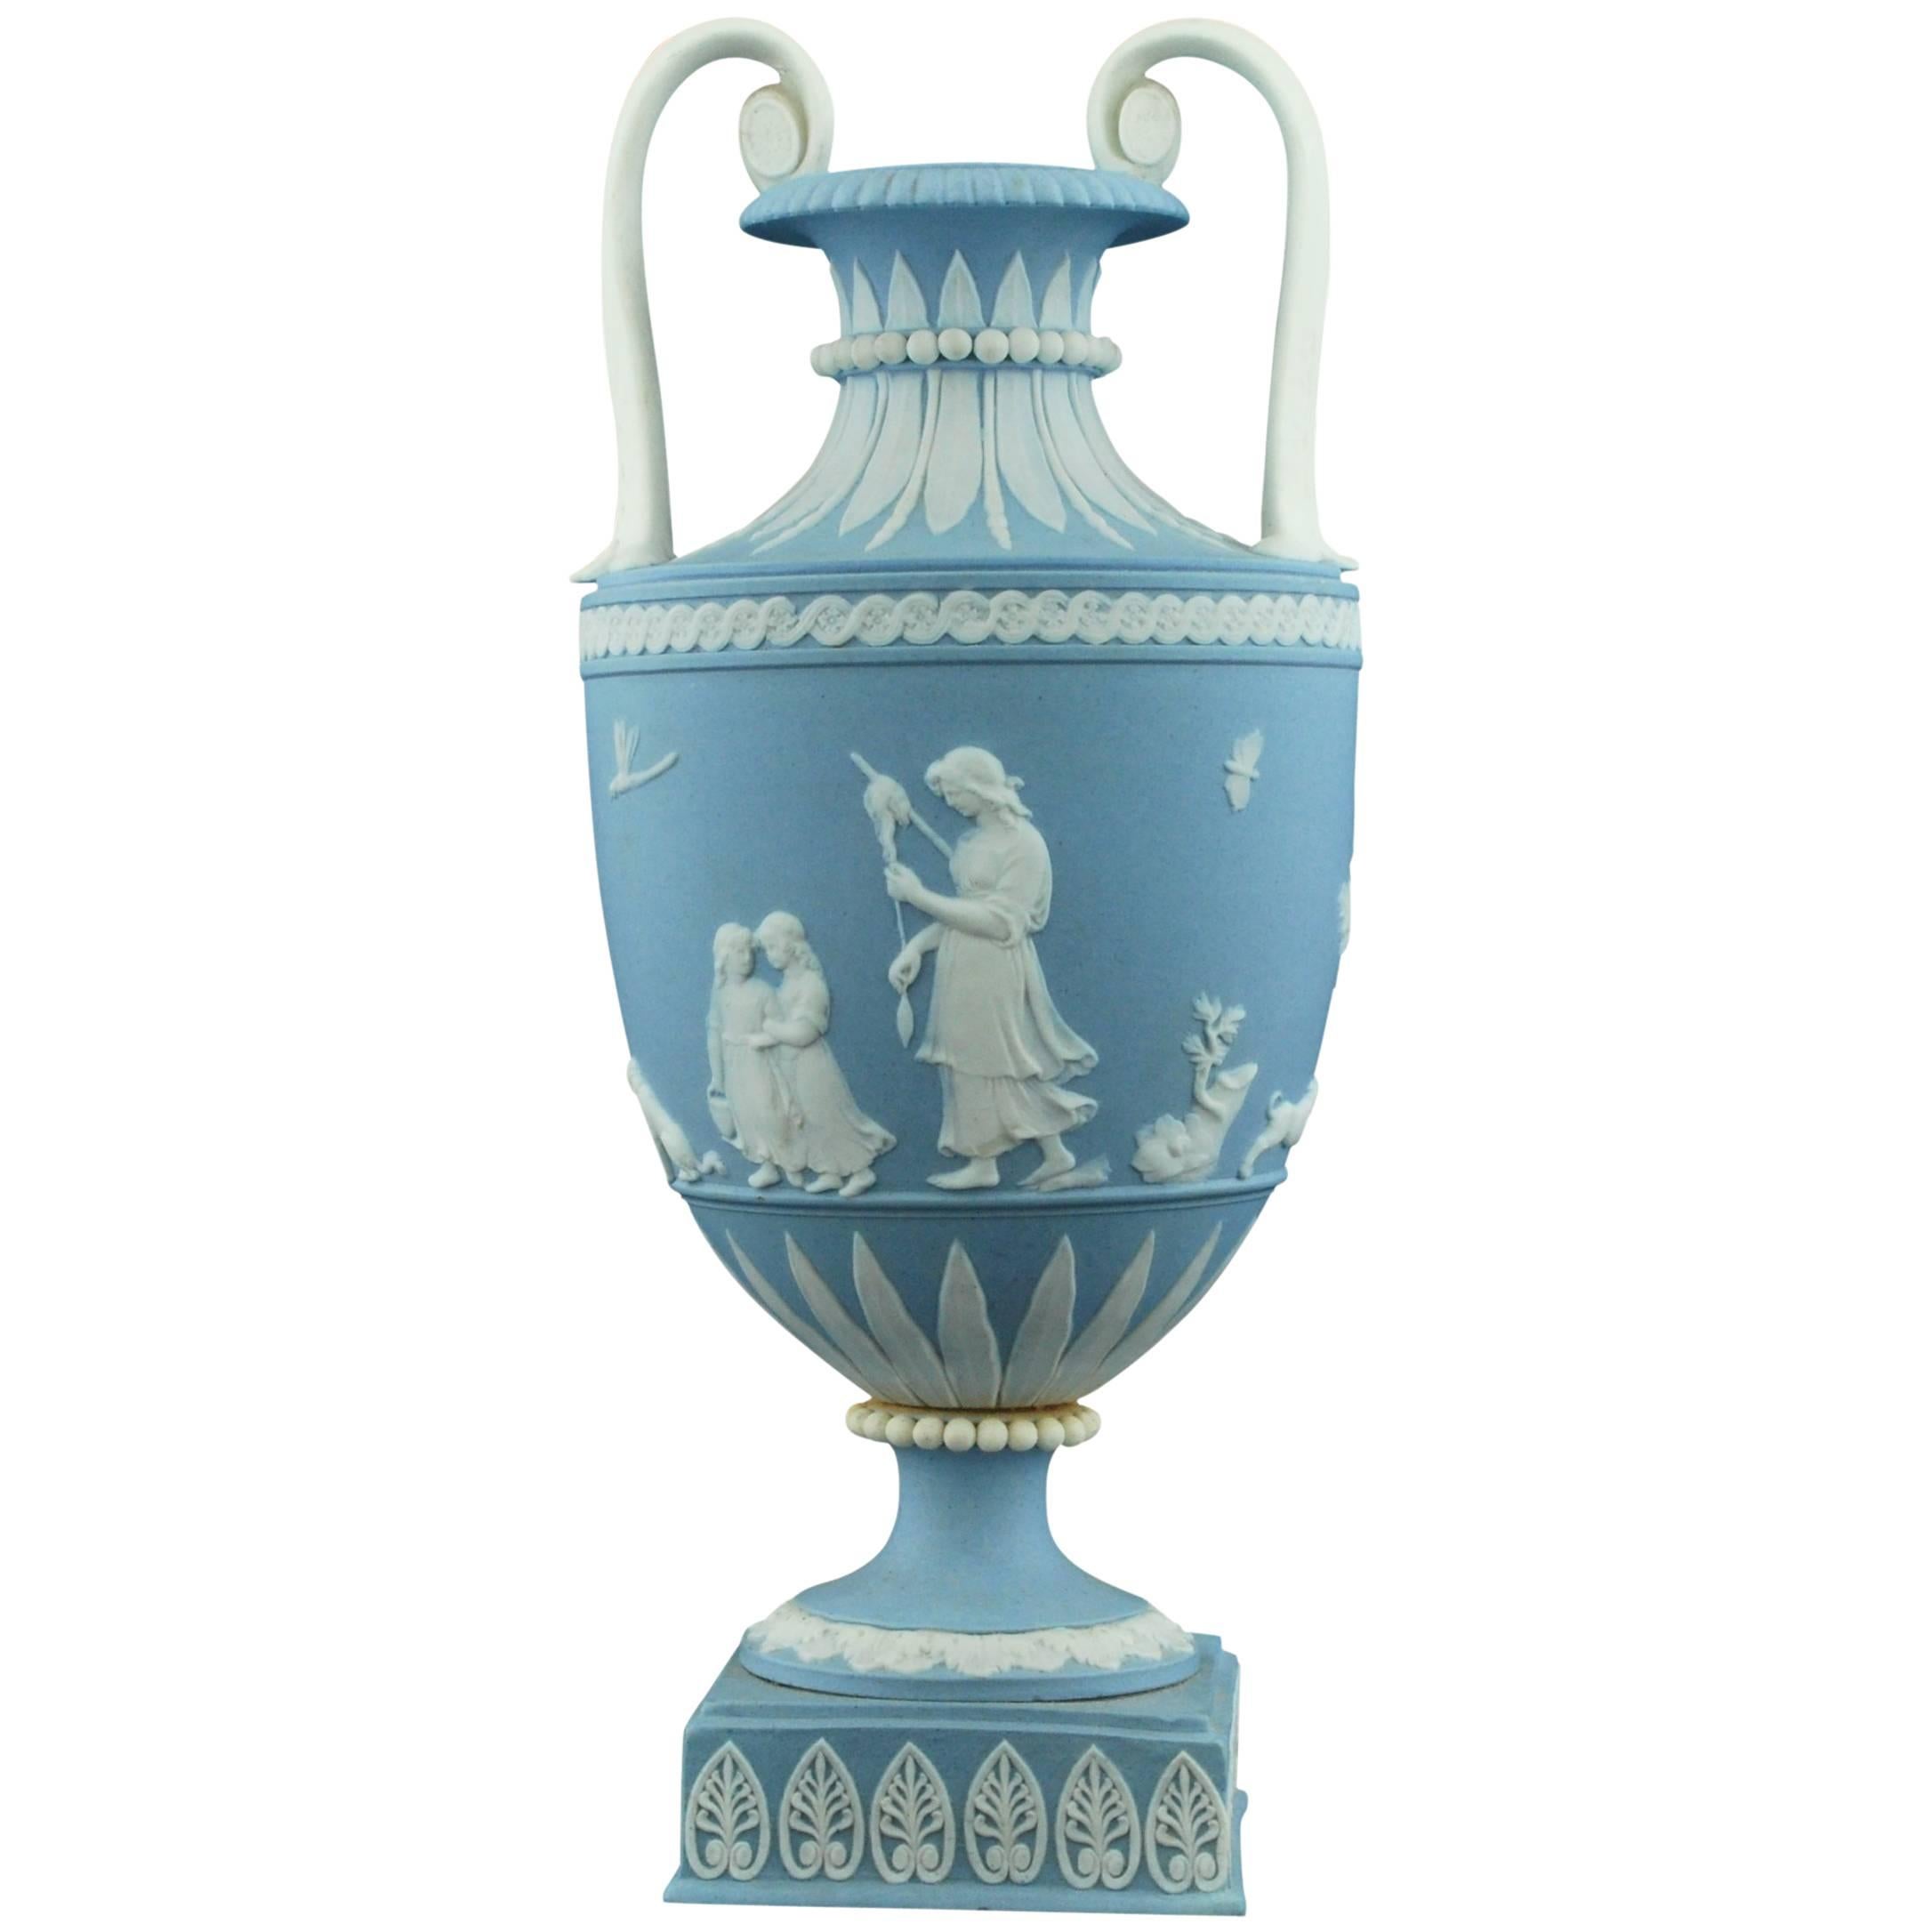 Miniature Jasperware Vase, Domestic Employment, Wedgwood, circa 1790